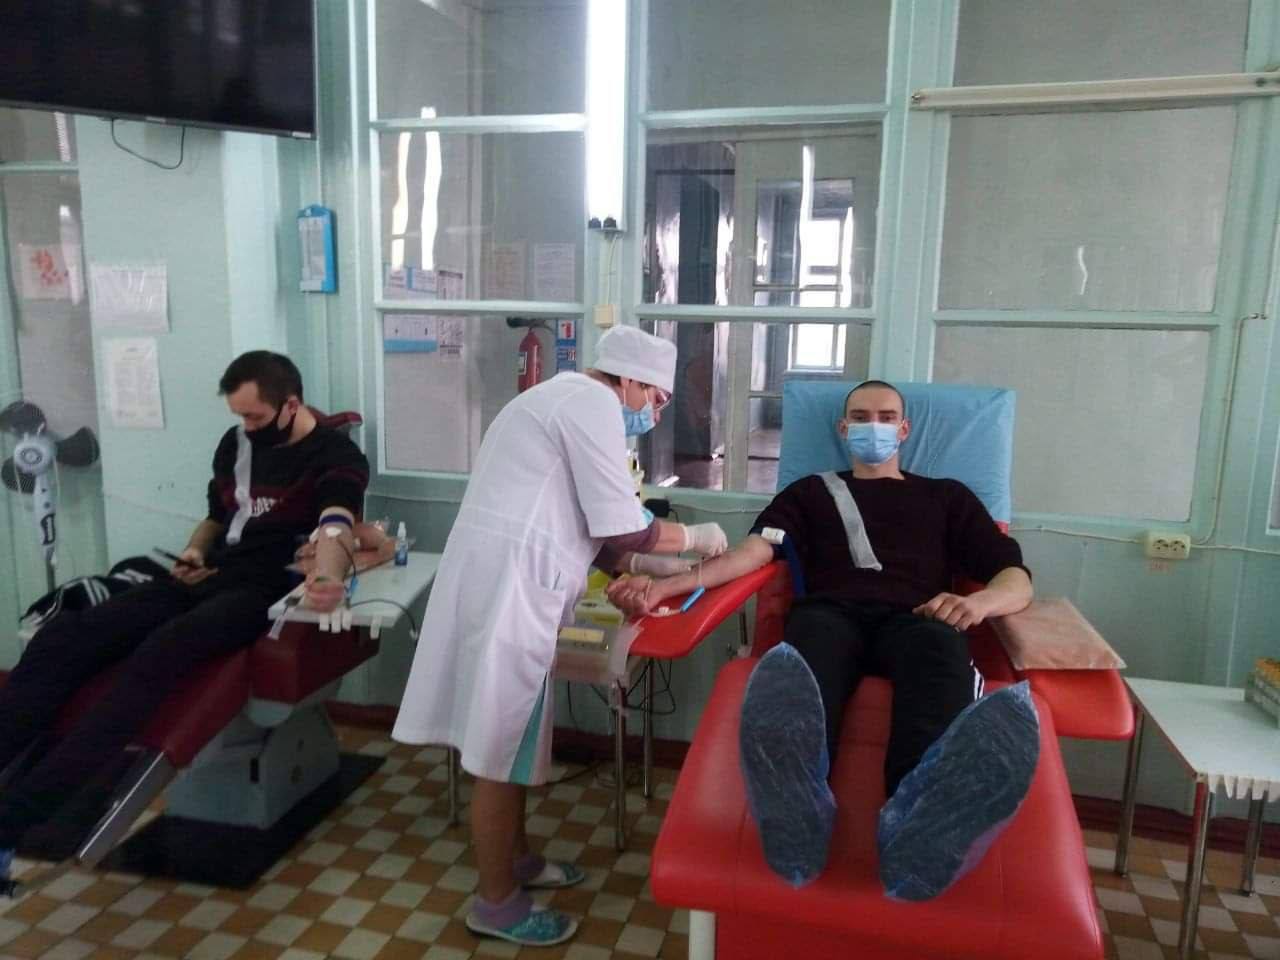 Центр сдачи крови в Херсоне. Фото из Telegram-канала Кирилла Тимошенко.